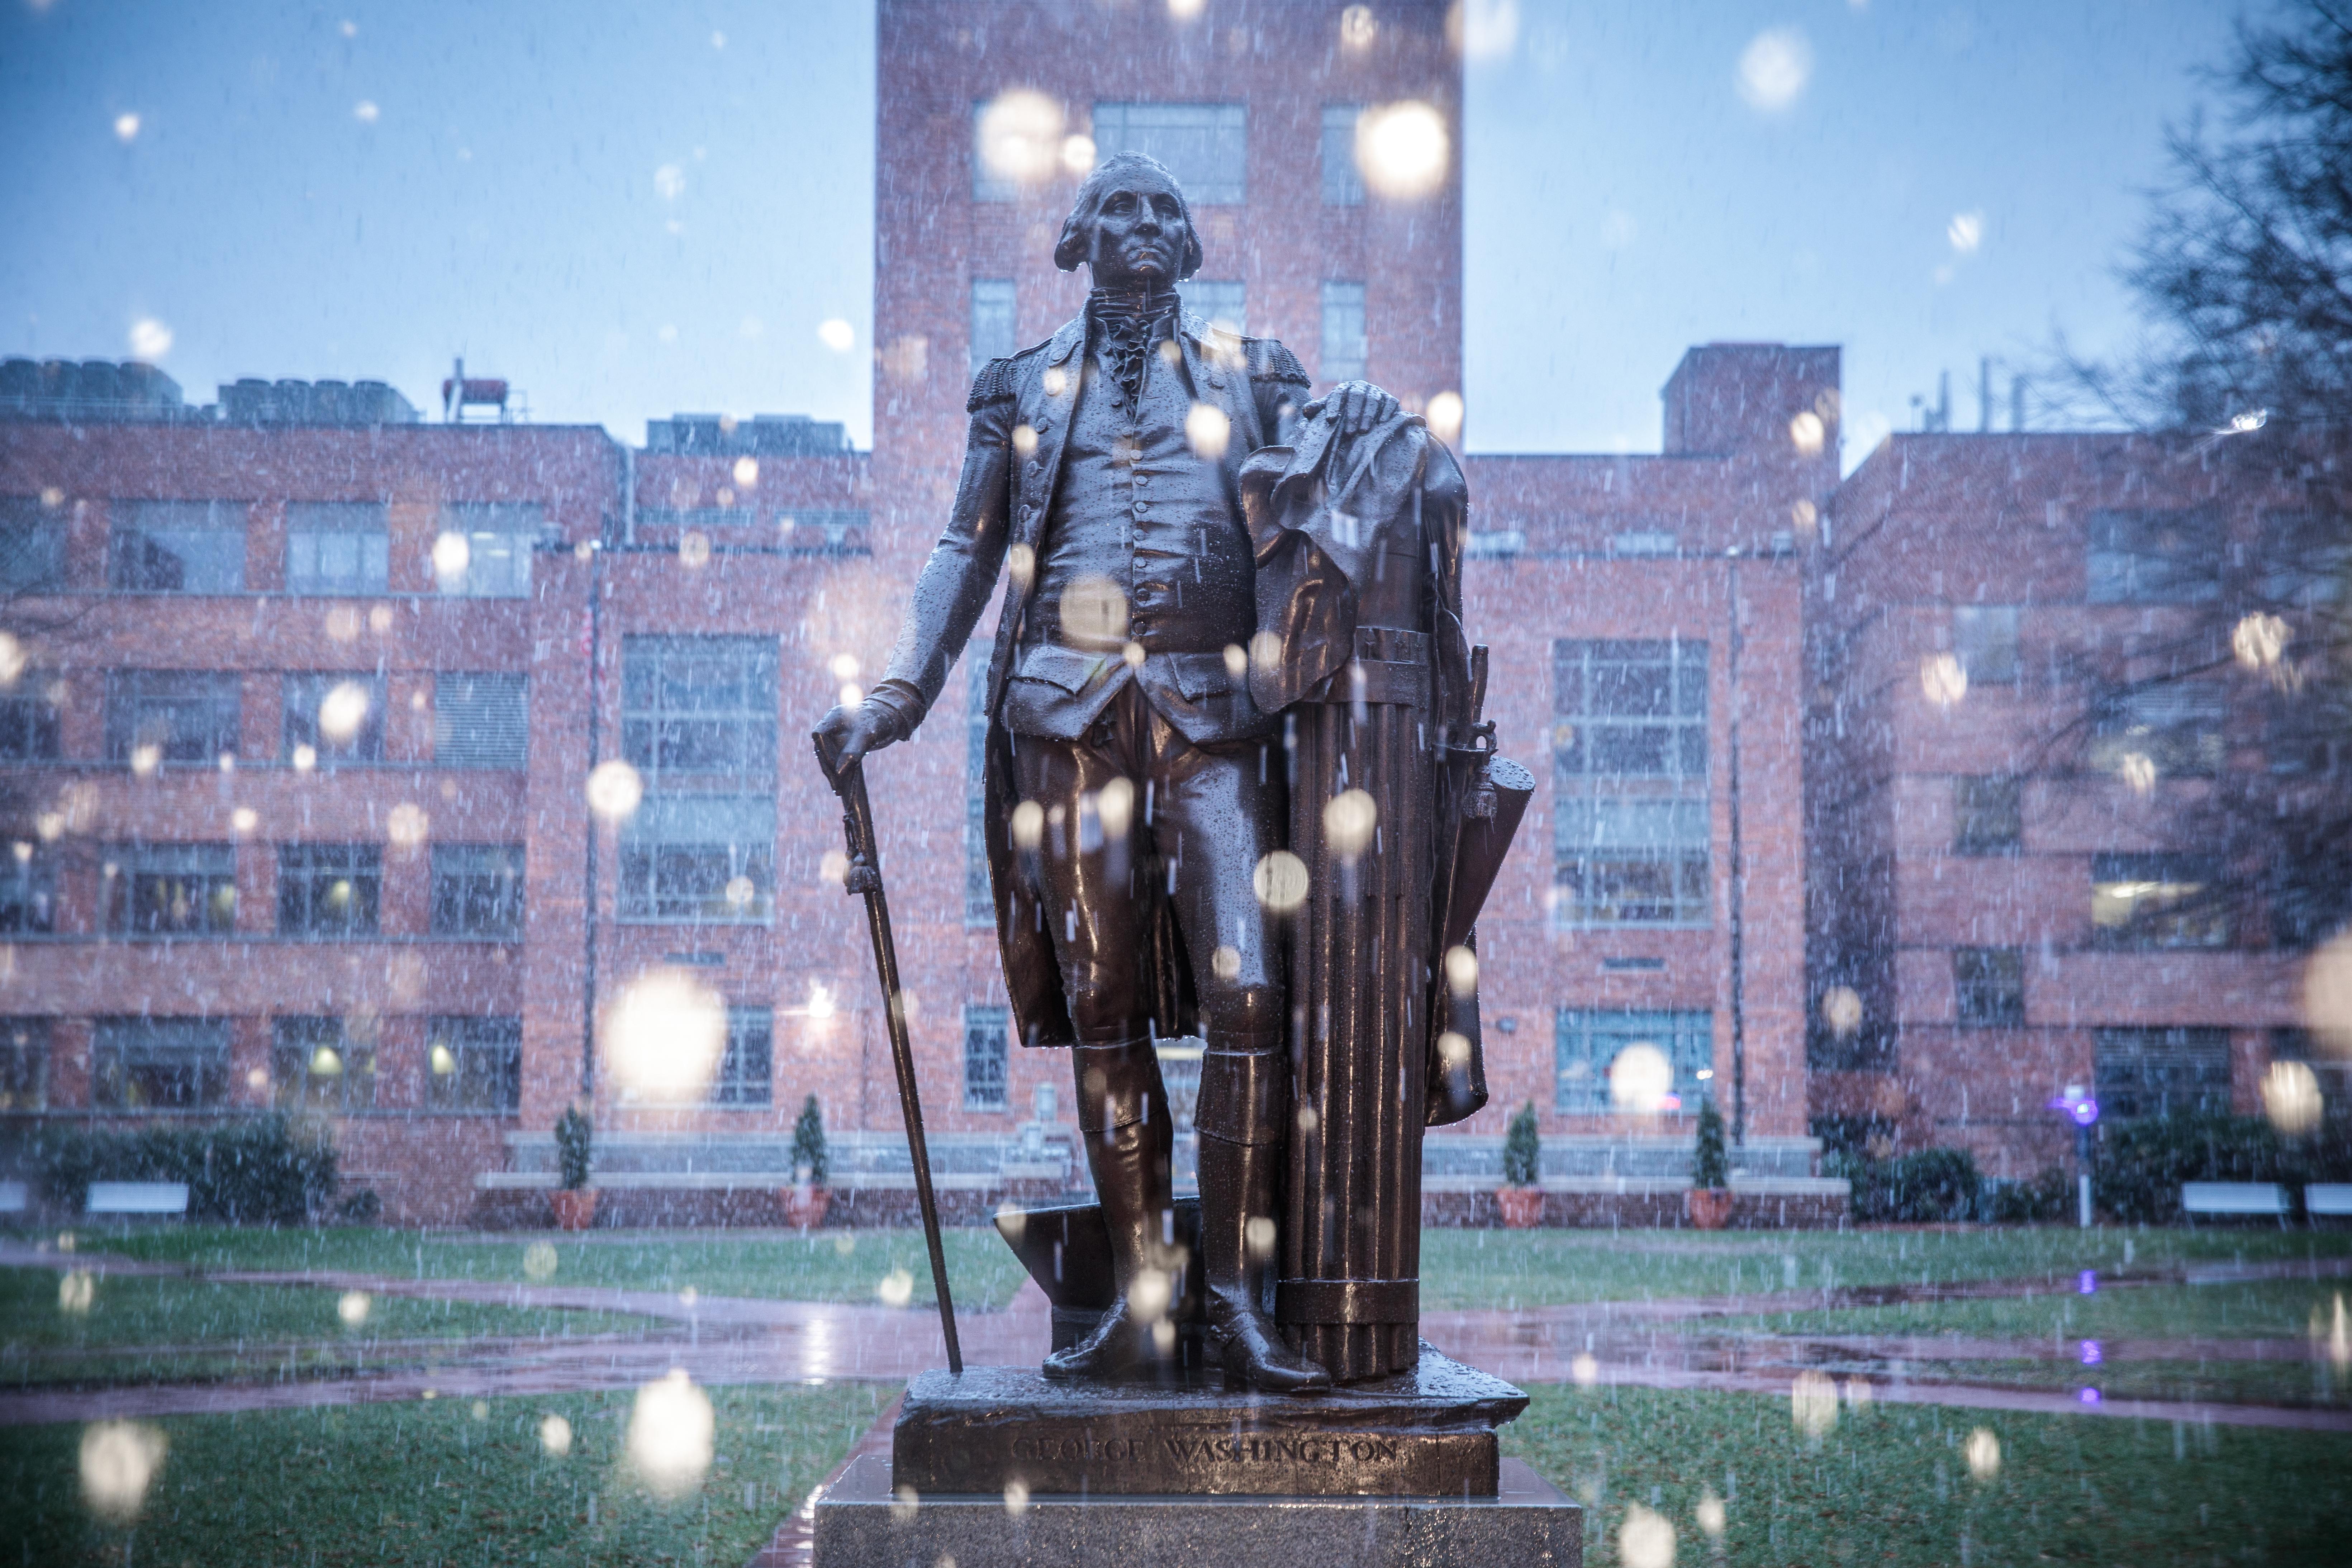 George Washington Statue in the snow